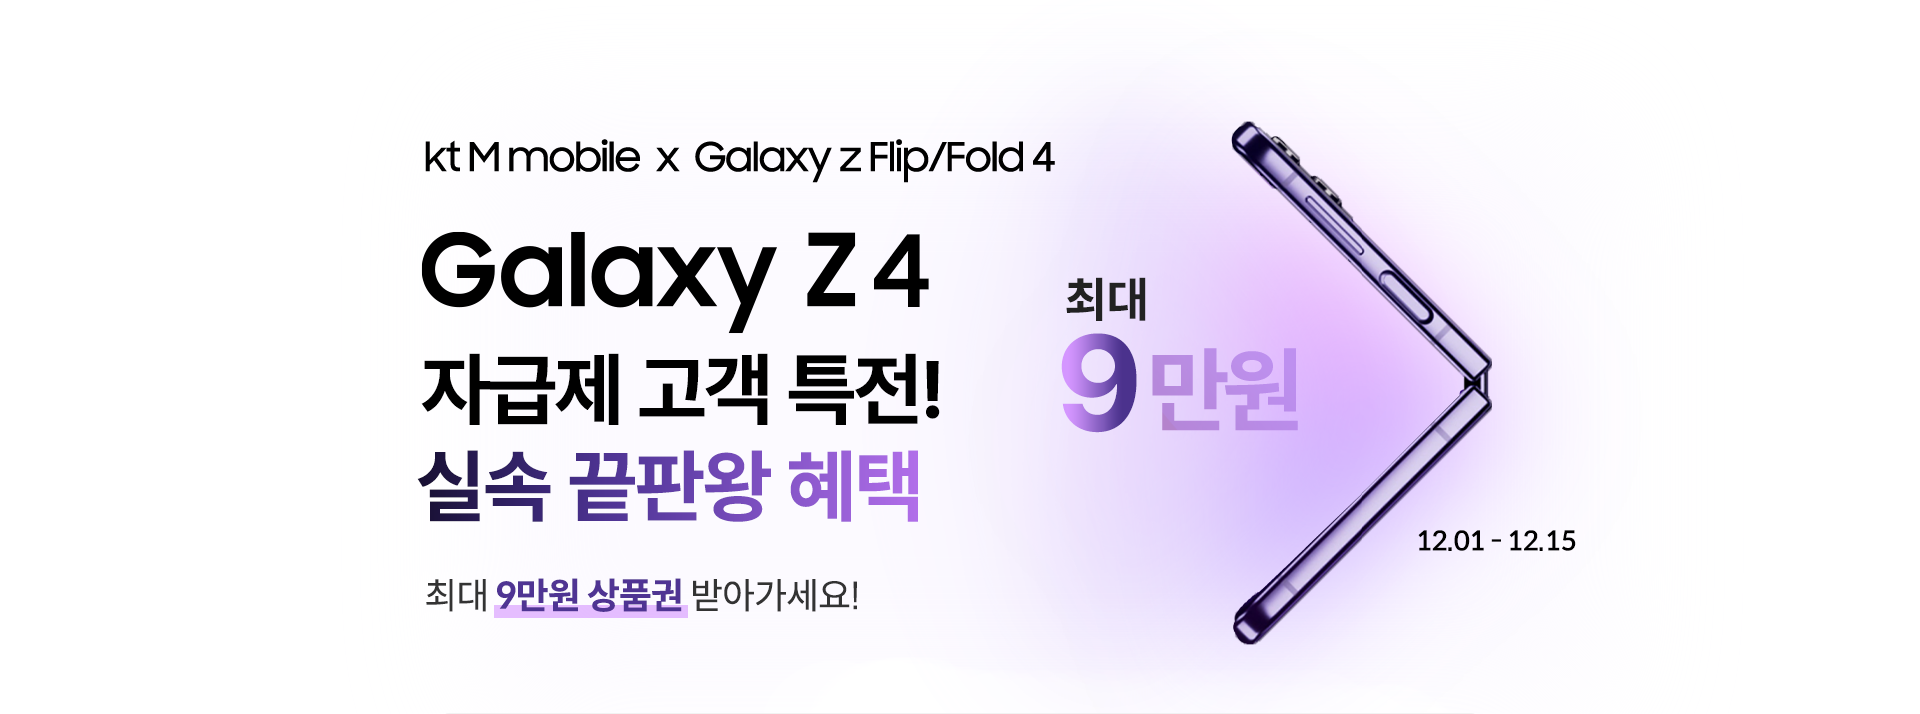 kt M mobile x Galaxy z Flip/Fold 4